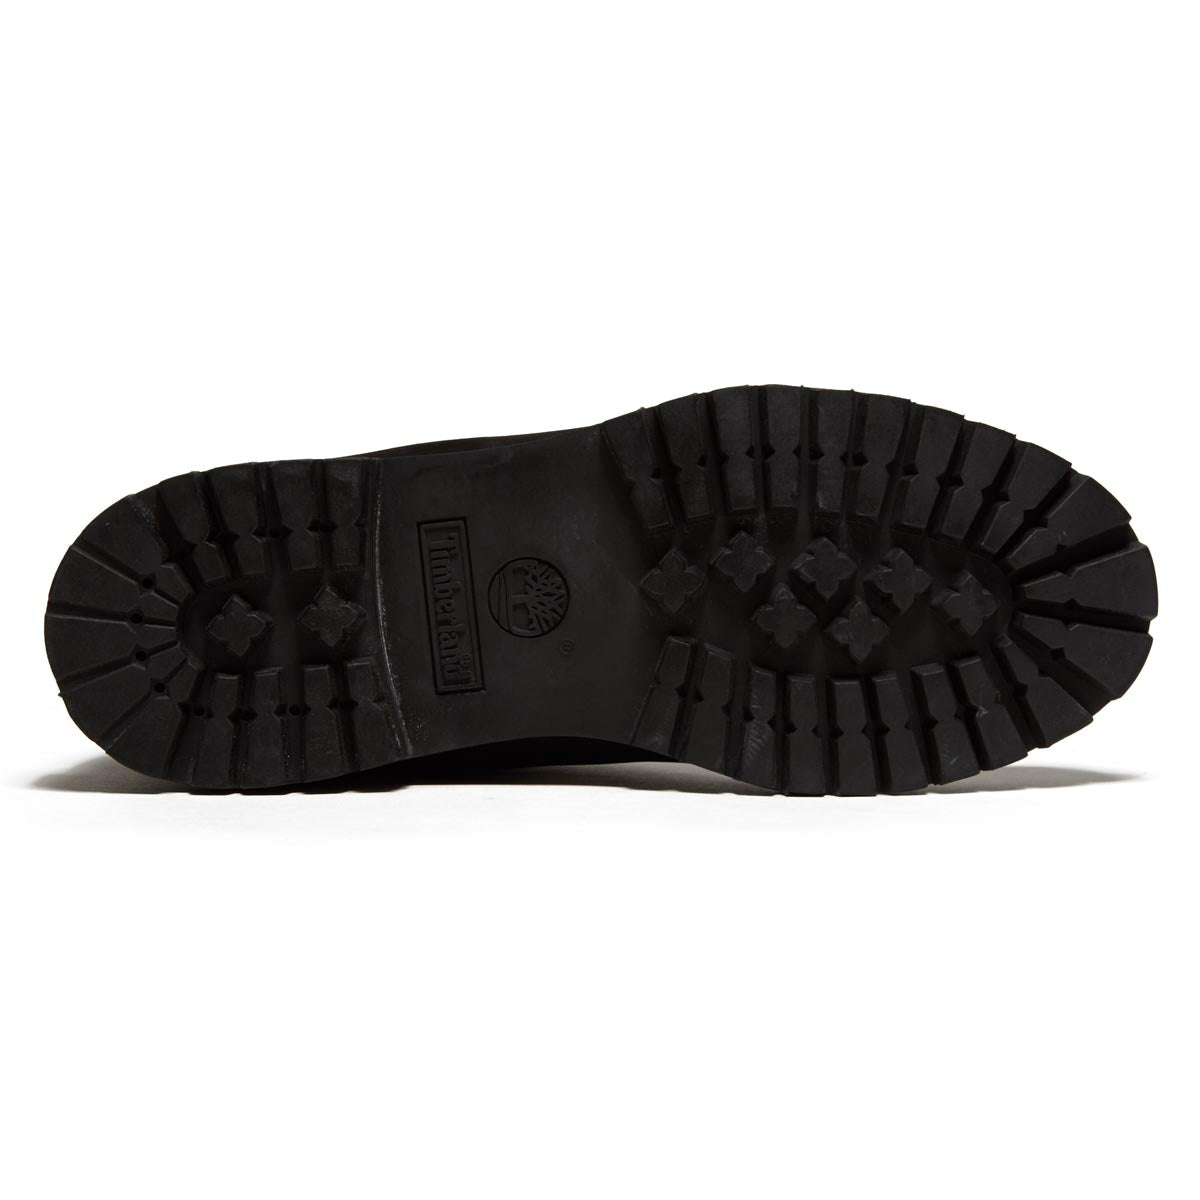 Timberland 6 Inch Premium Boots - Black Nubuck image 4